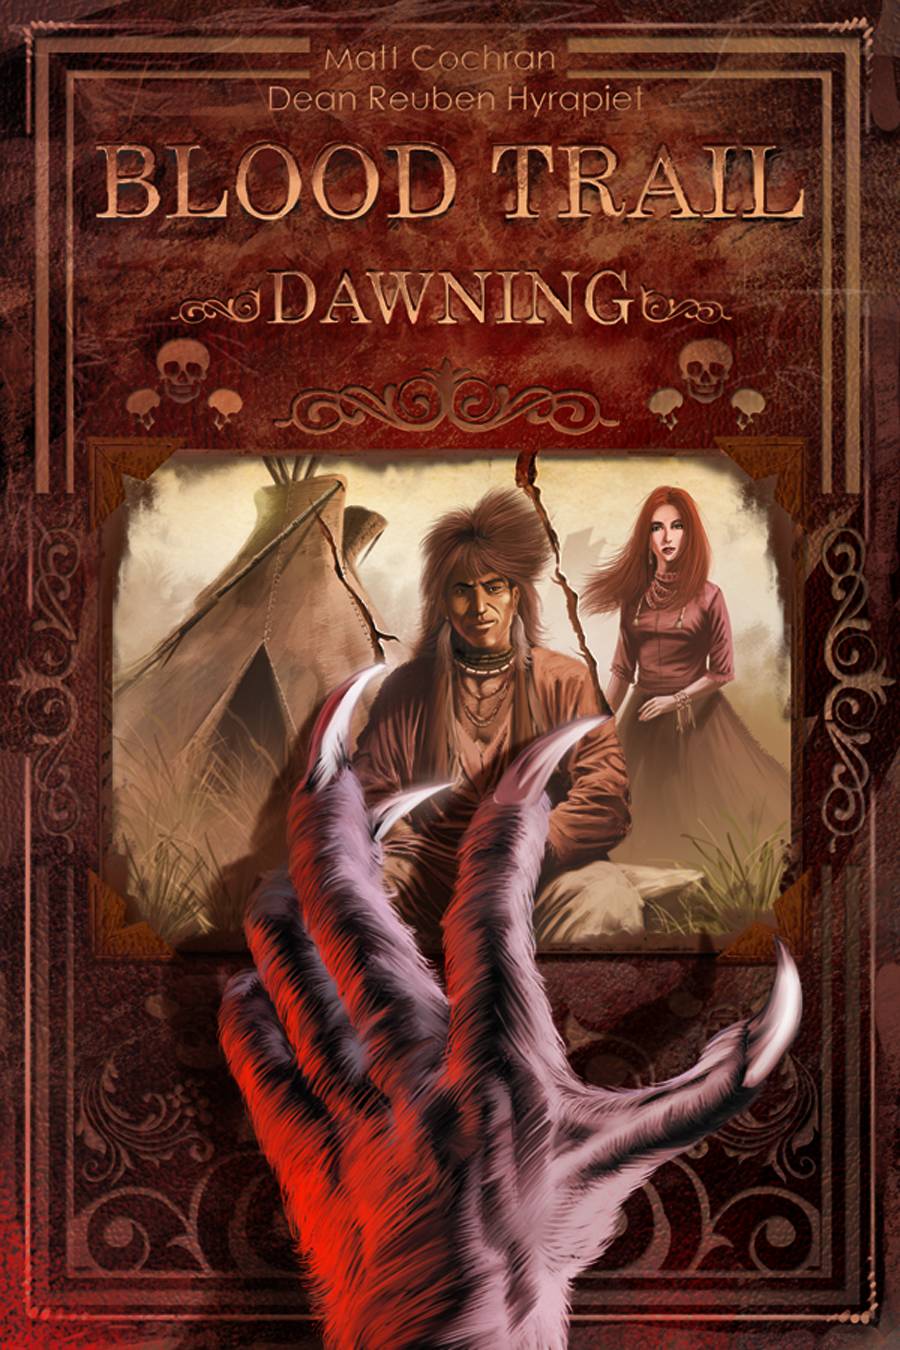 Blood Trail Dawning Graphic Novel (Mature)